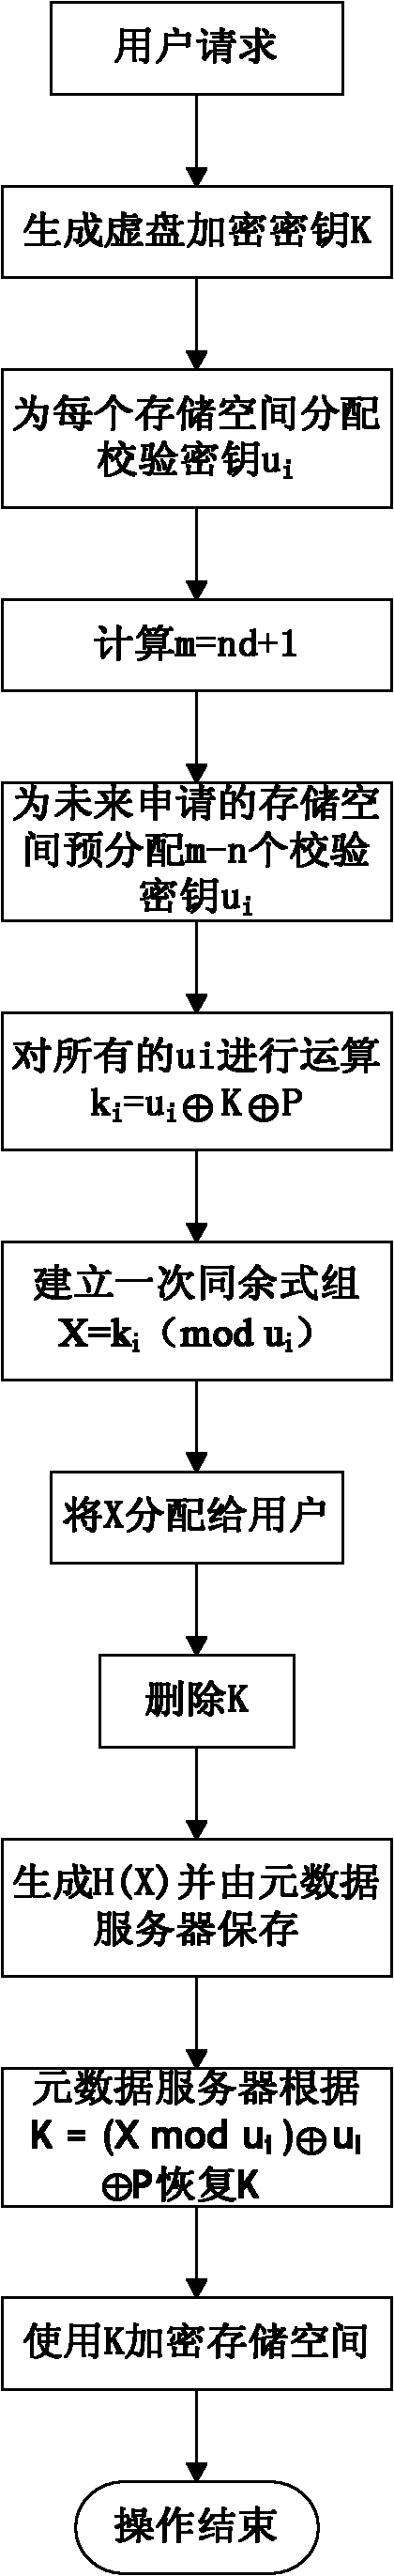 Distributed key management method for ciphertext storage